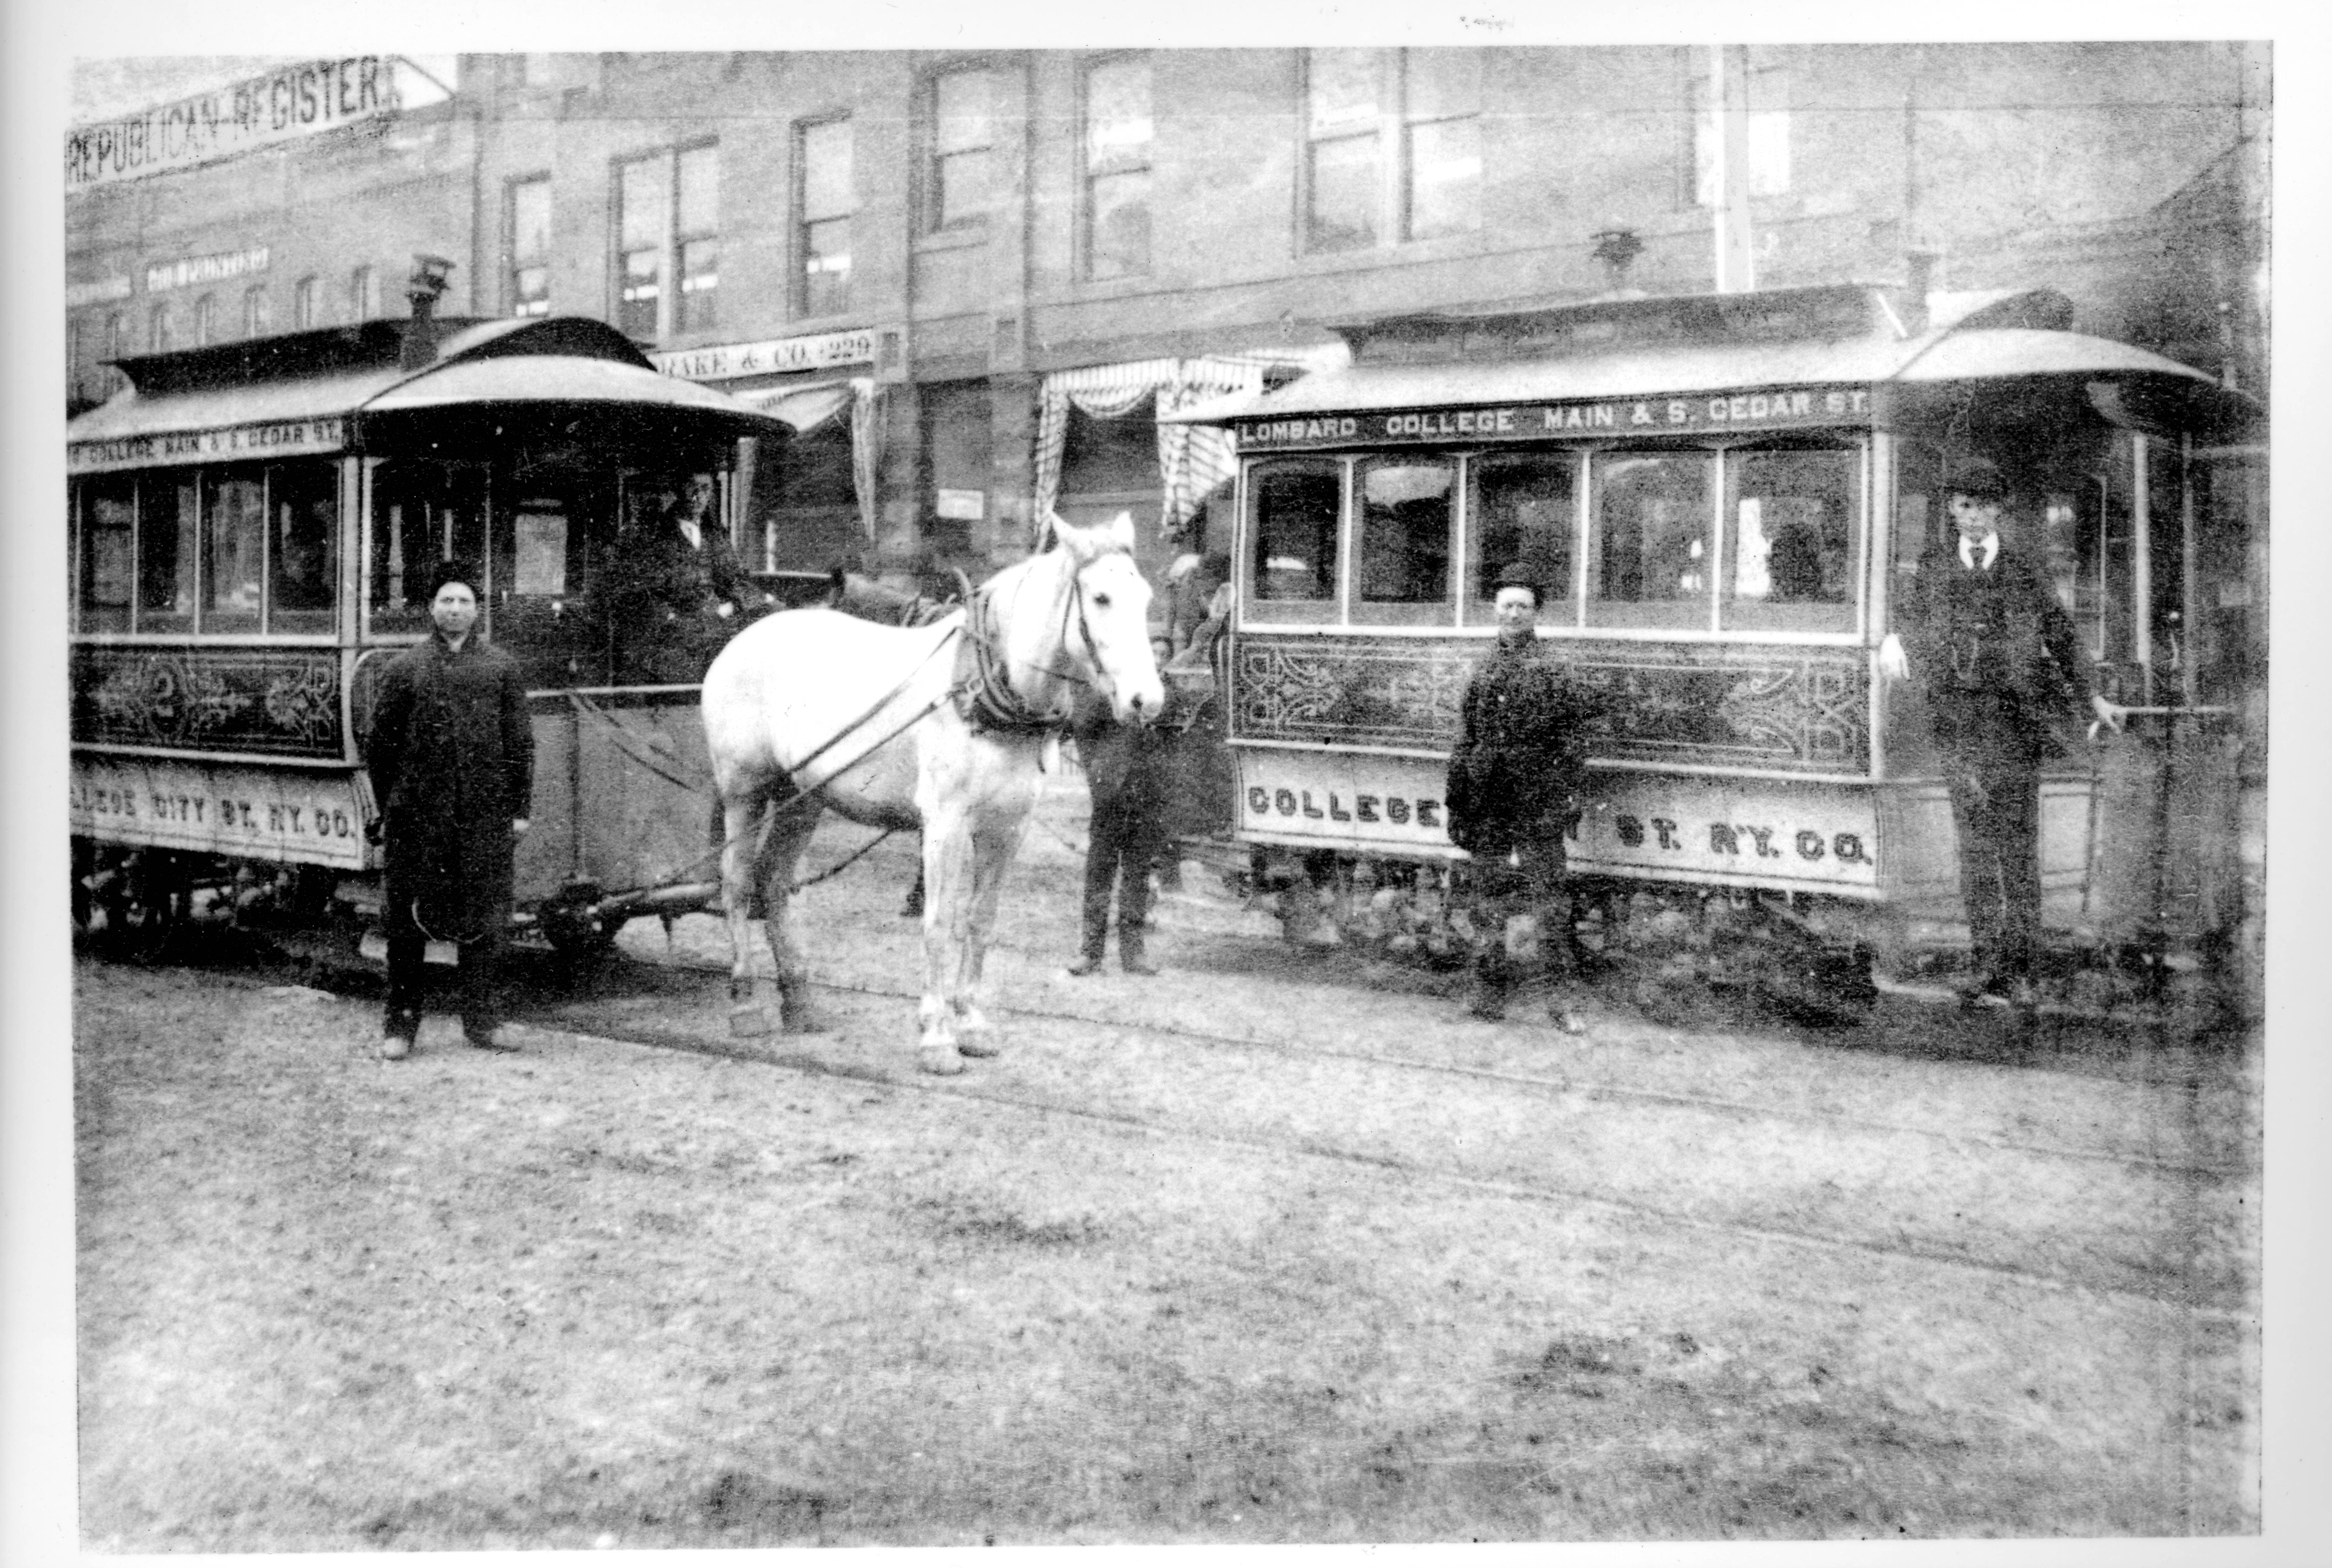 Horse-drawn Streetcars - Courtesy of Galeburg Public Library